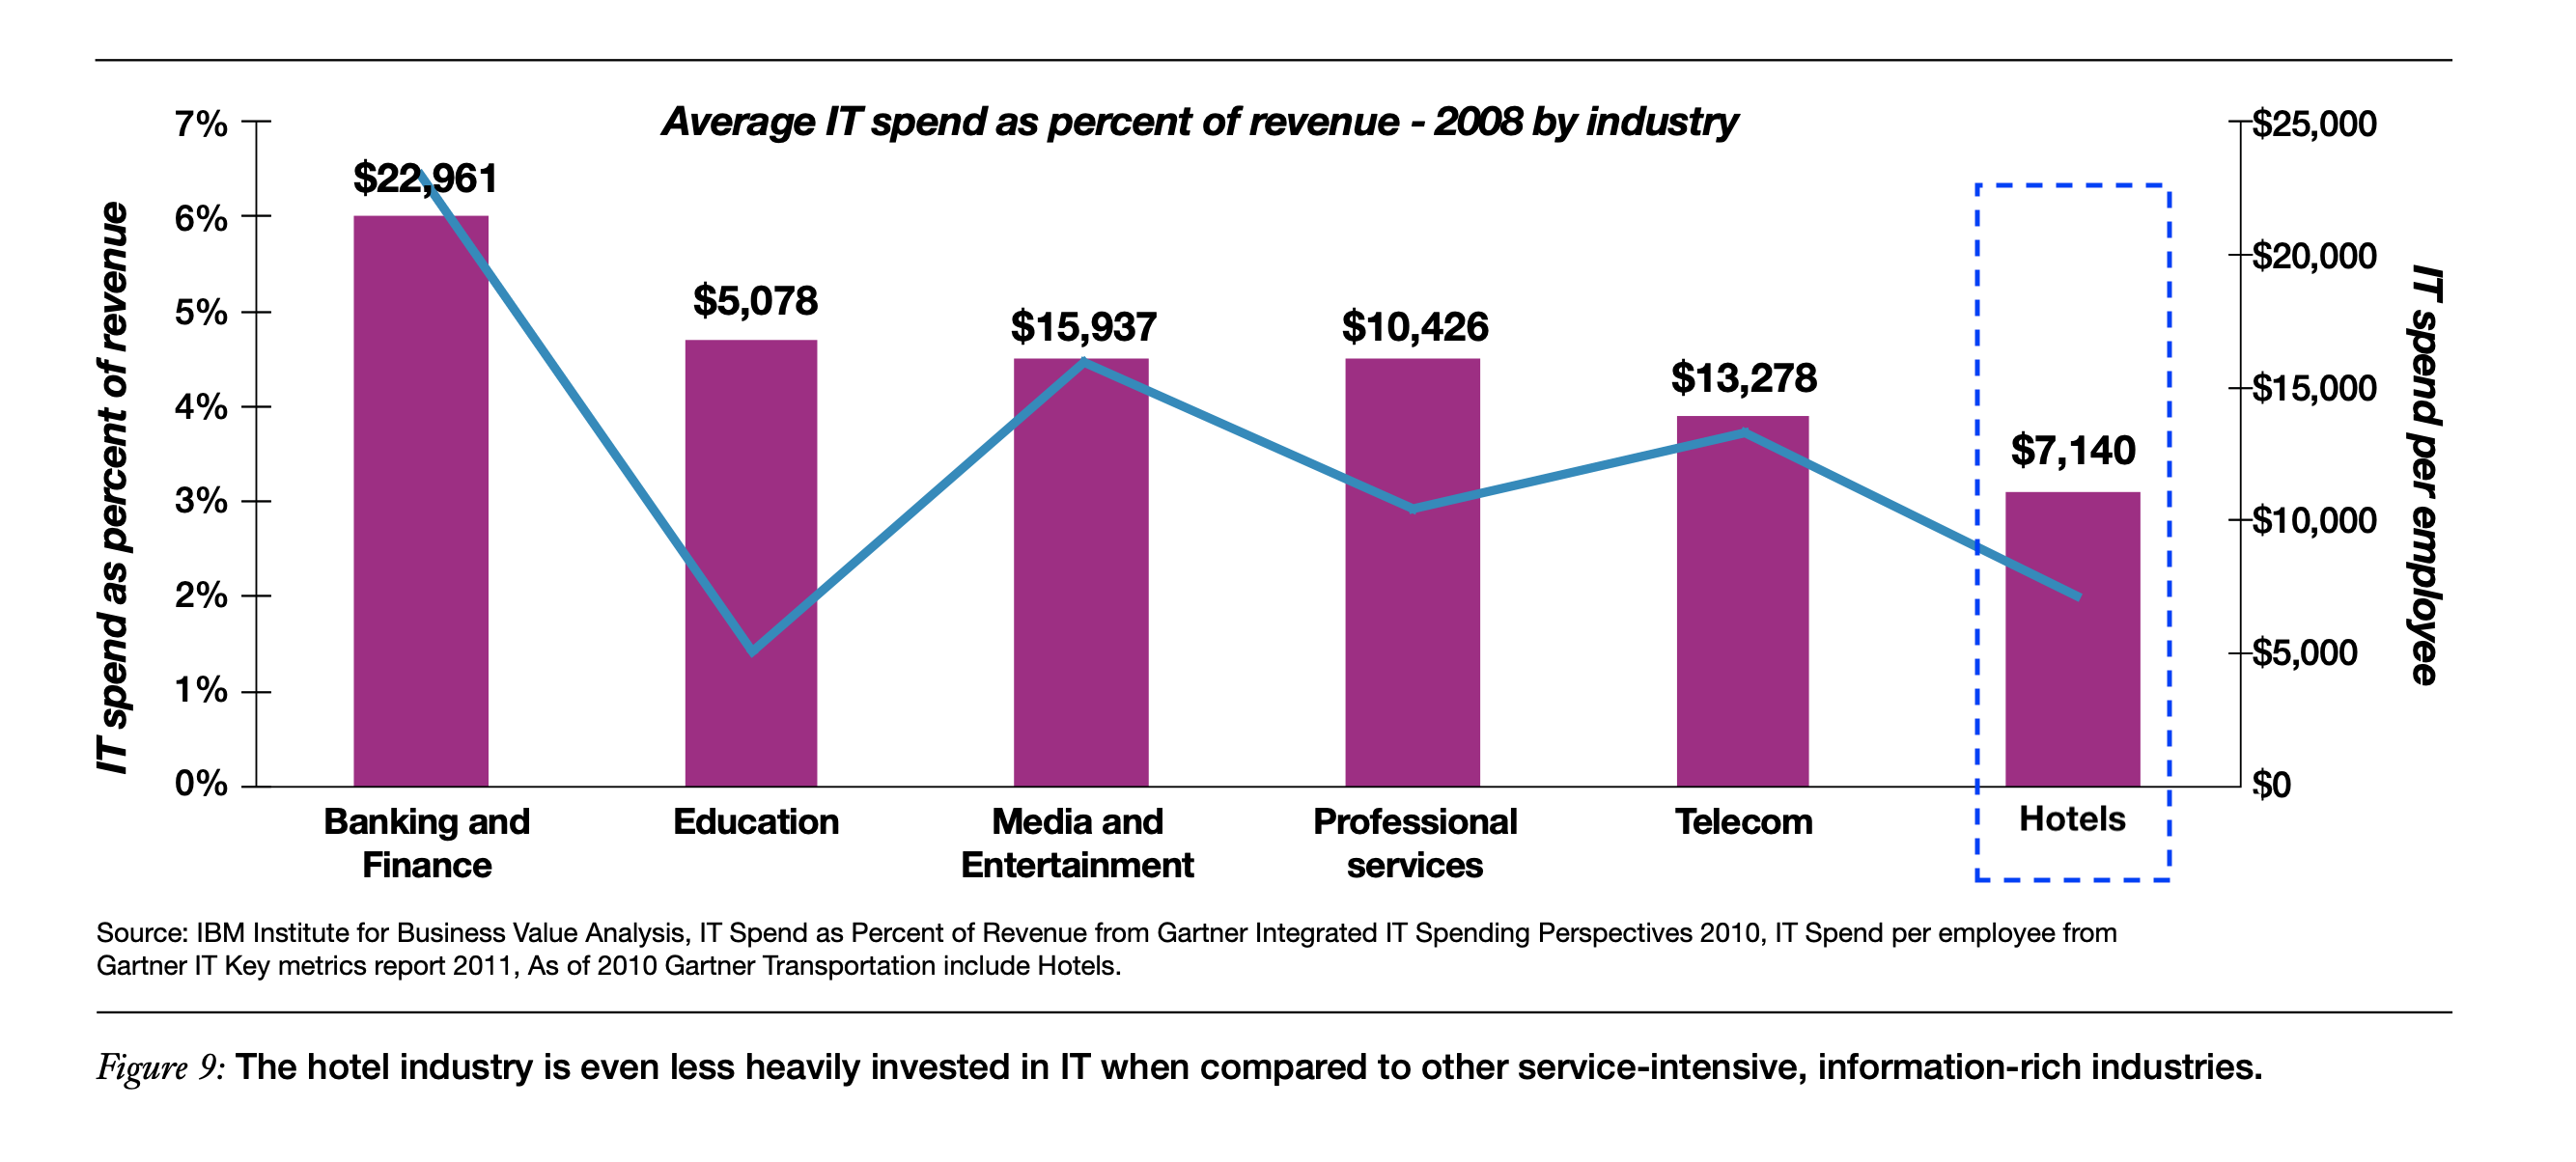 Average IT Spend as a percentage of revenue